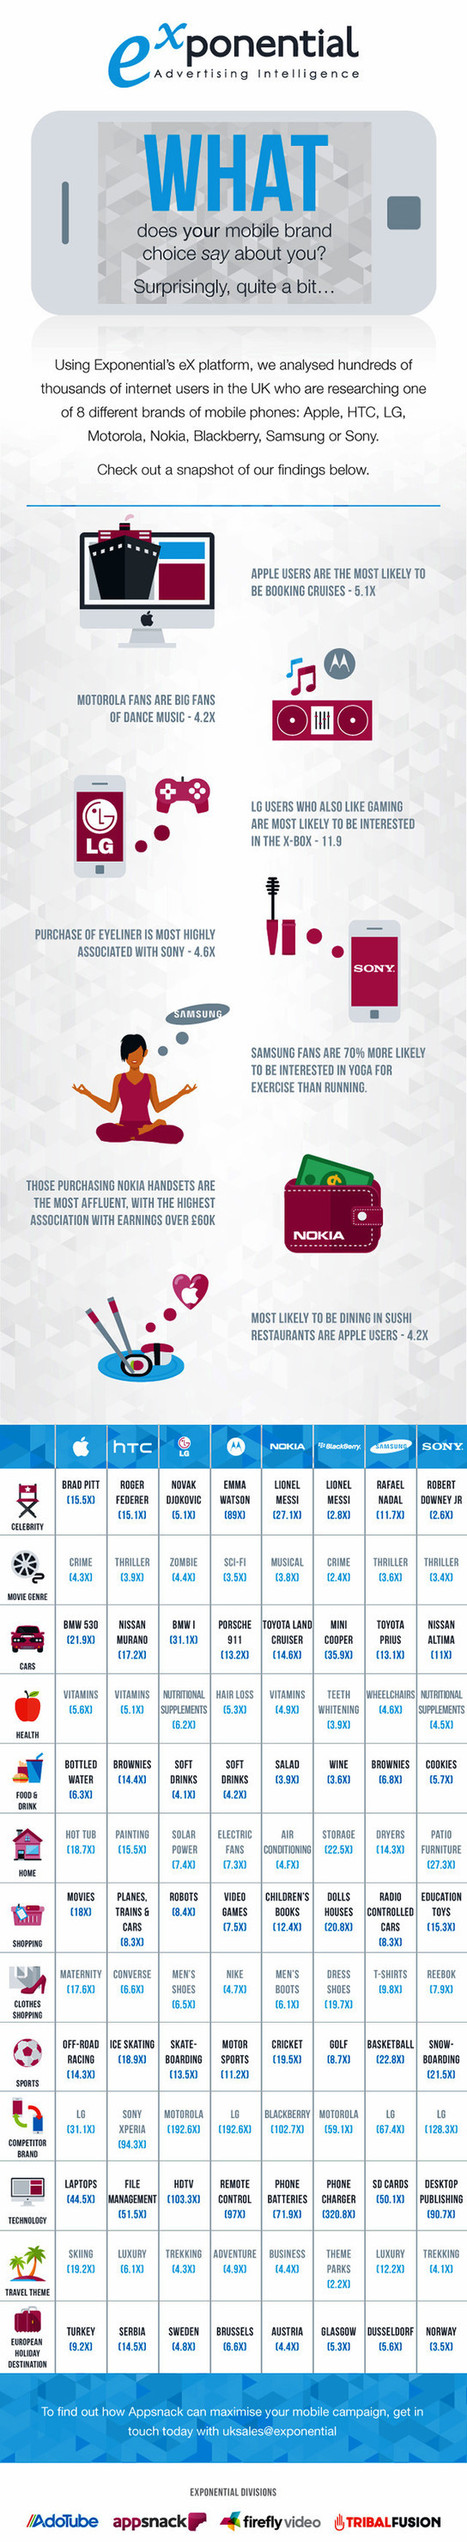 Lo que tu móvil dice de ti #infografia #infographic | Seo, Social Media Marketing | Scoop.it